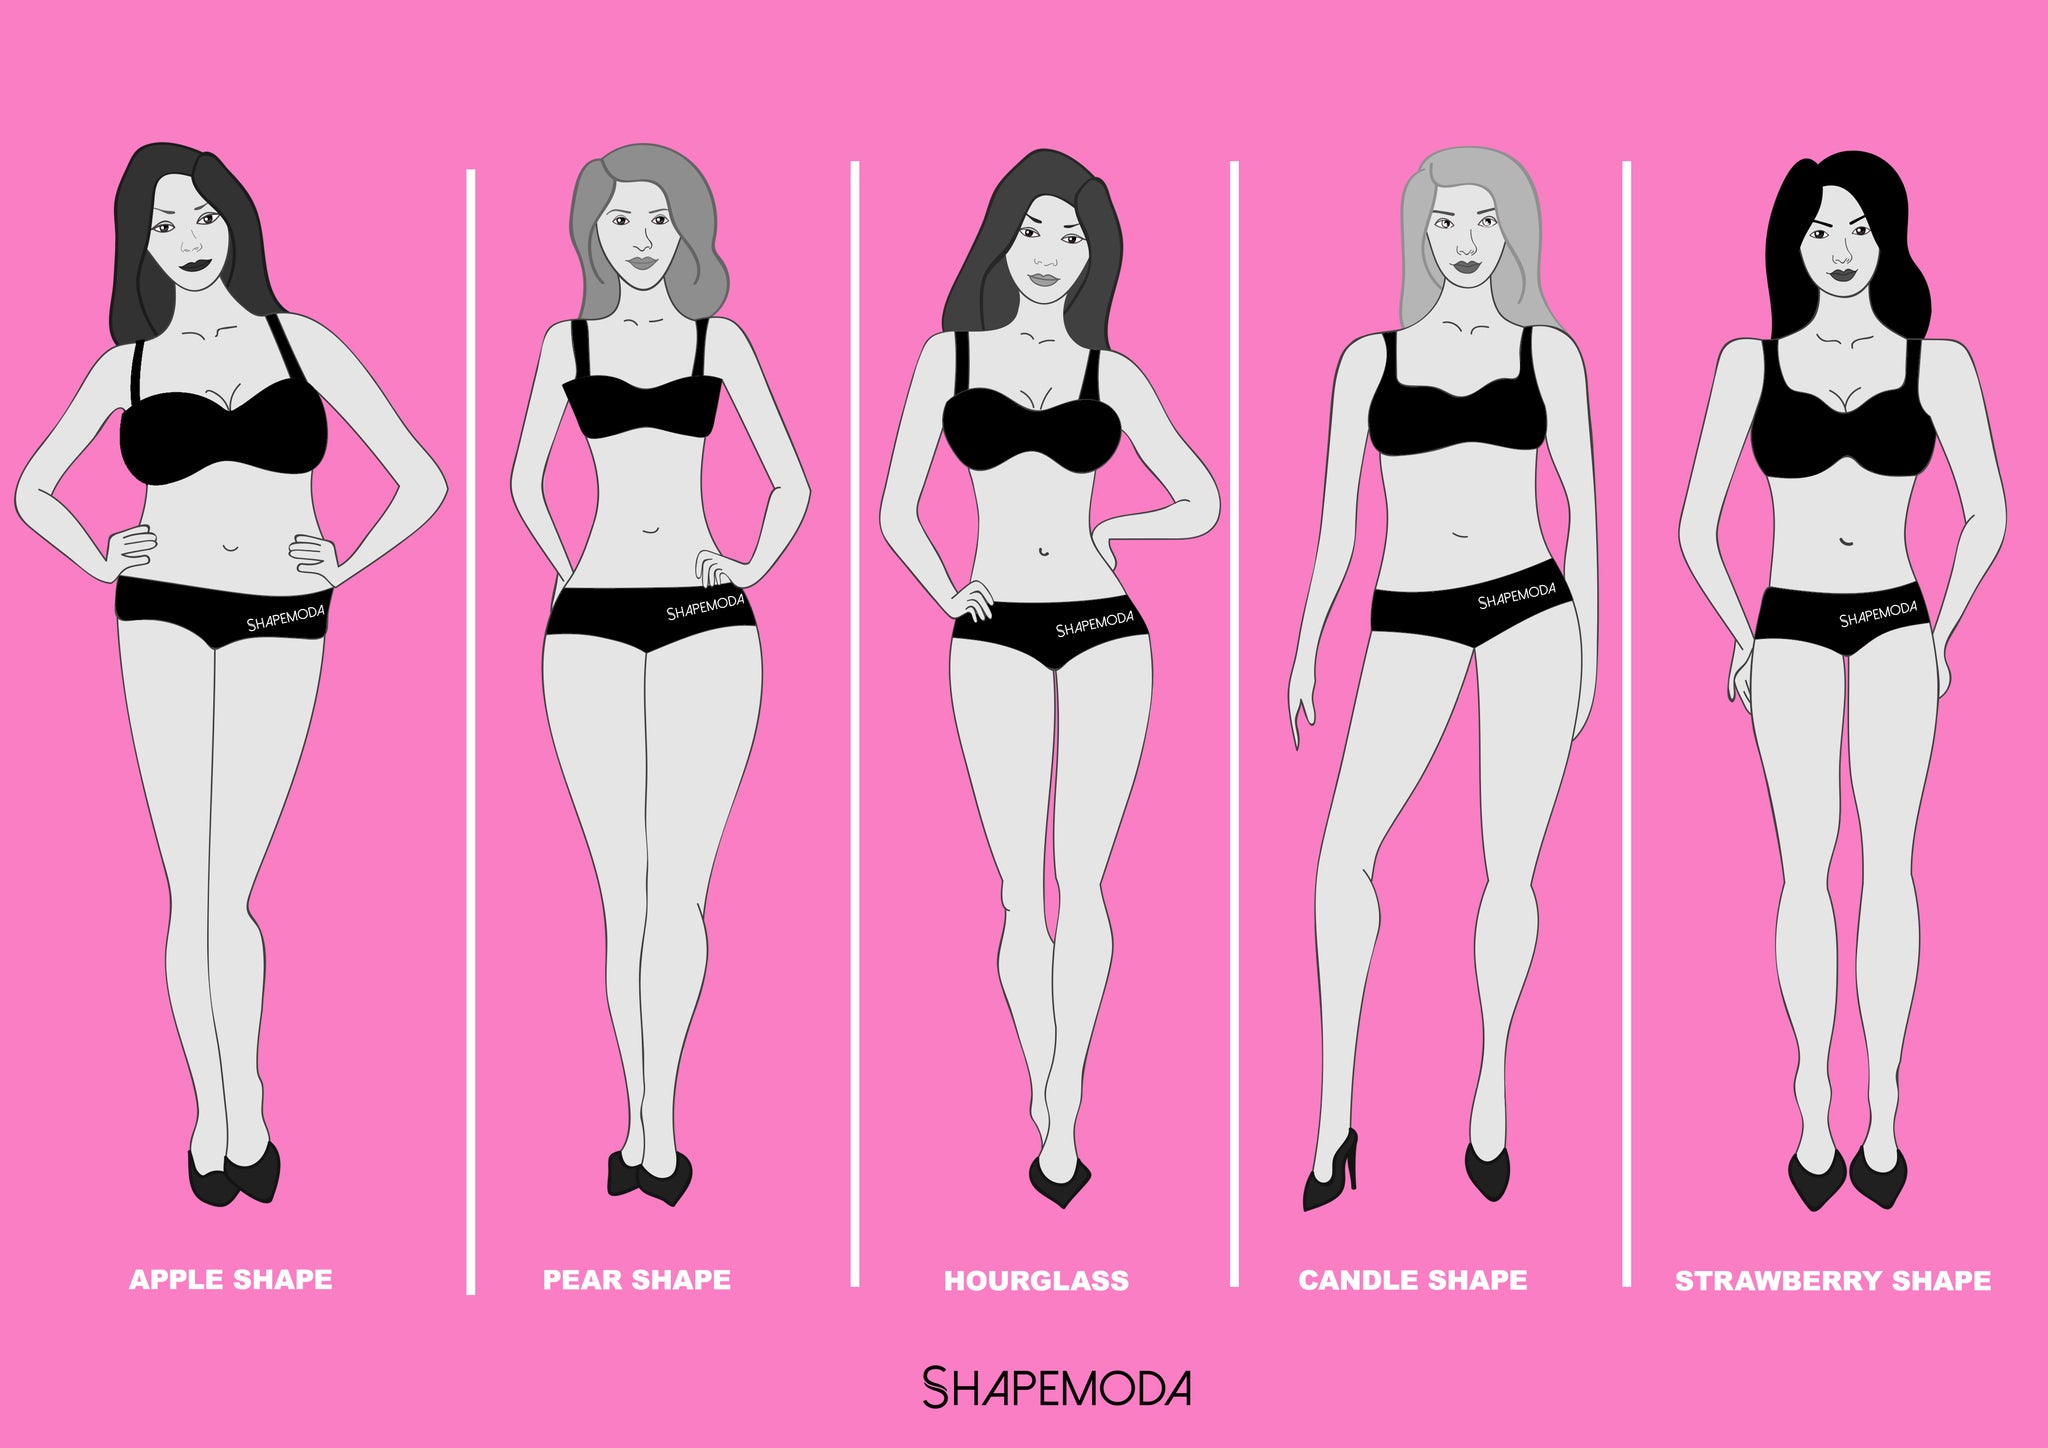 Understanding body shape